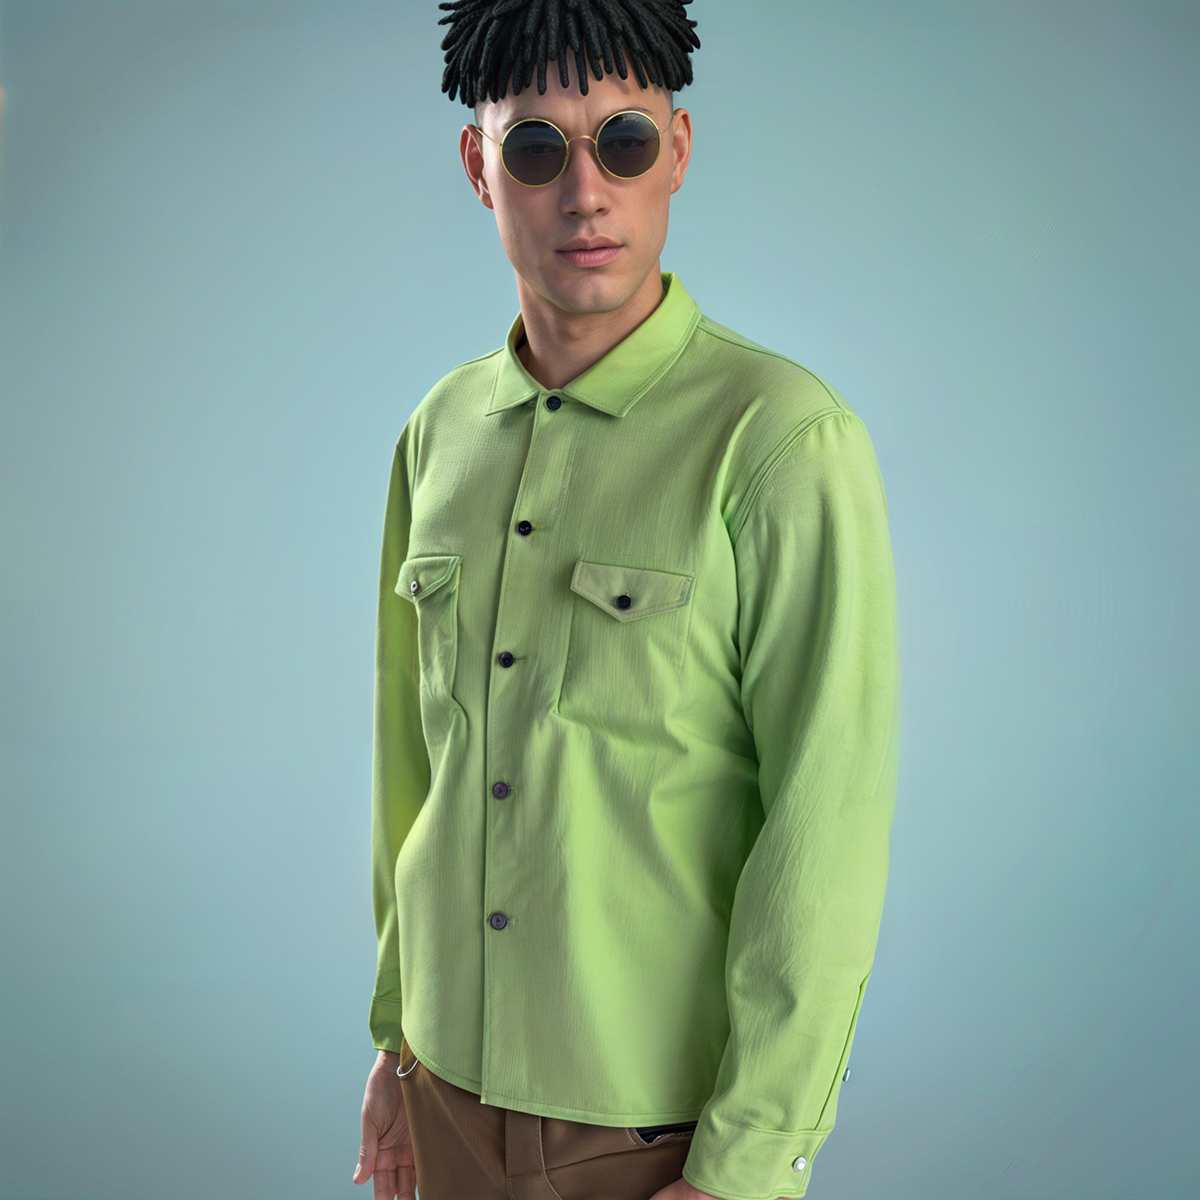 Clothing fashion design apparel streetwear Clo3d digital fashion 3D Clothing virtual fashion Render visualization